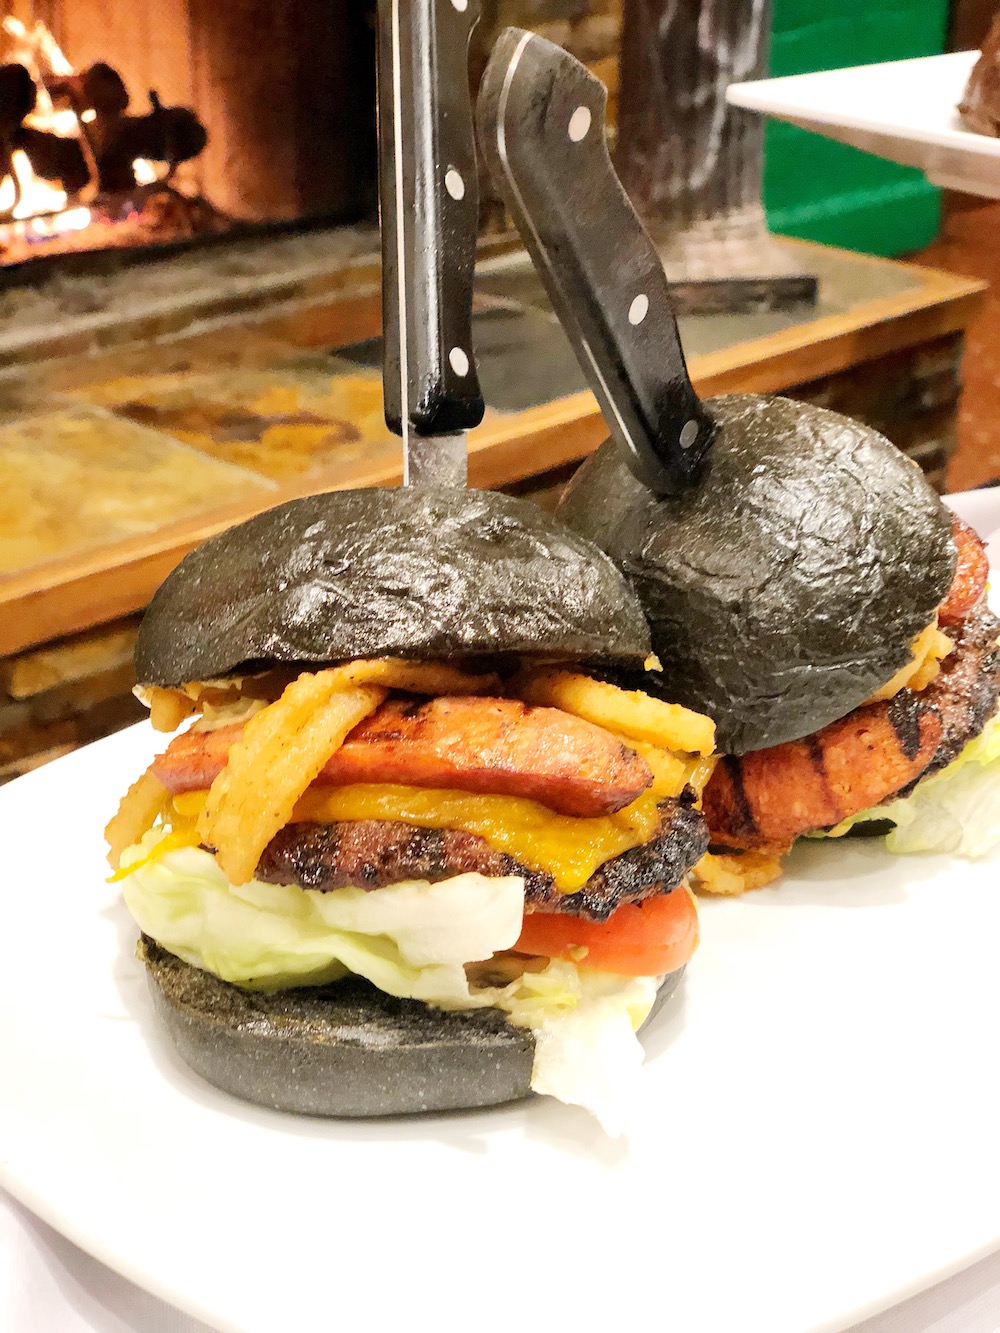 Lights out monster burger is served on a black bun. Get it during Knott's Spooky Farm | livingmividaloca.com | #scaryfarm #knottsberryfarm #flaminghotcheetos #themepark #amusementpark #familytravel #california #southerncalifornia